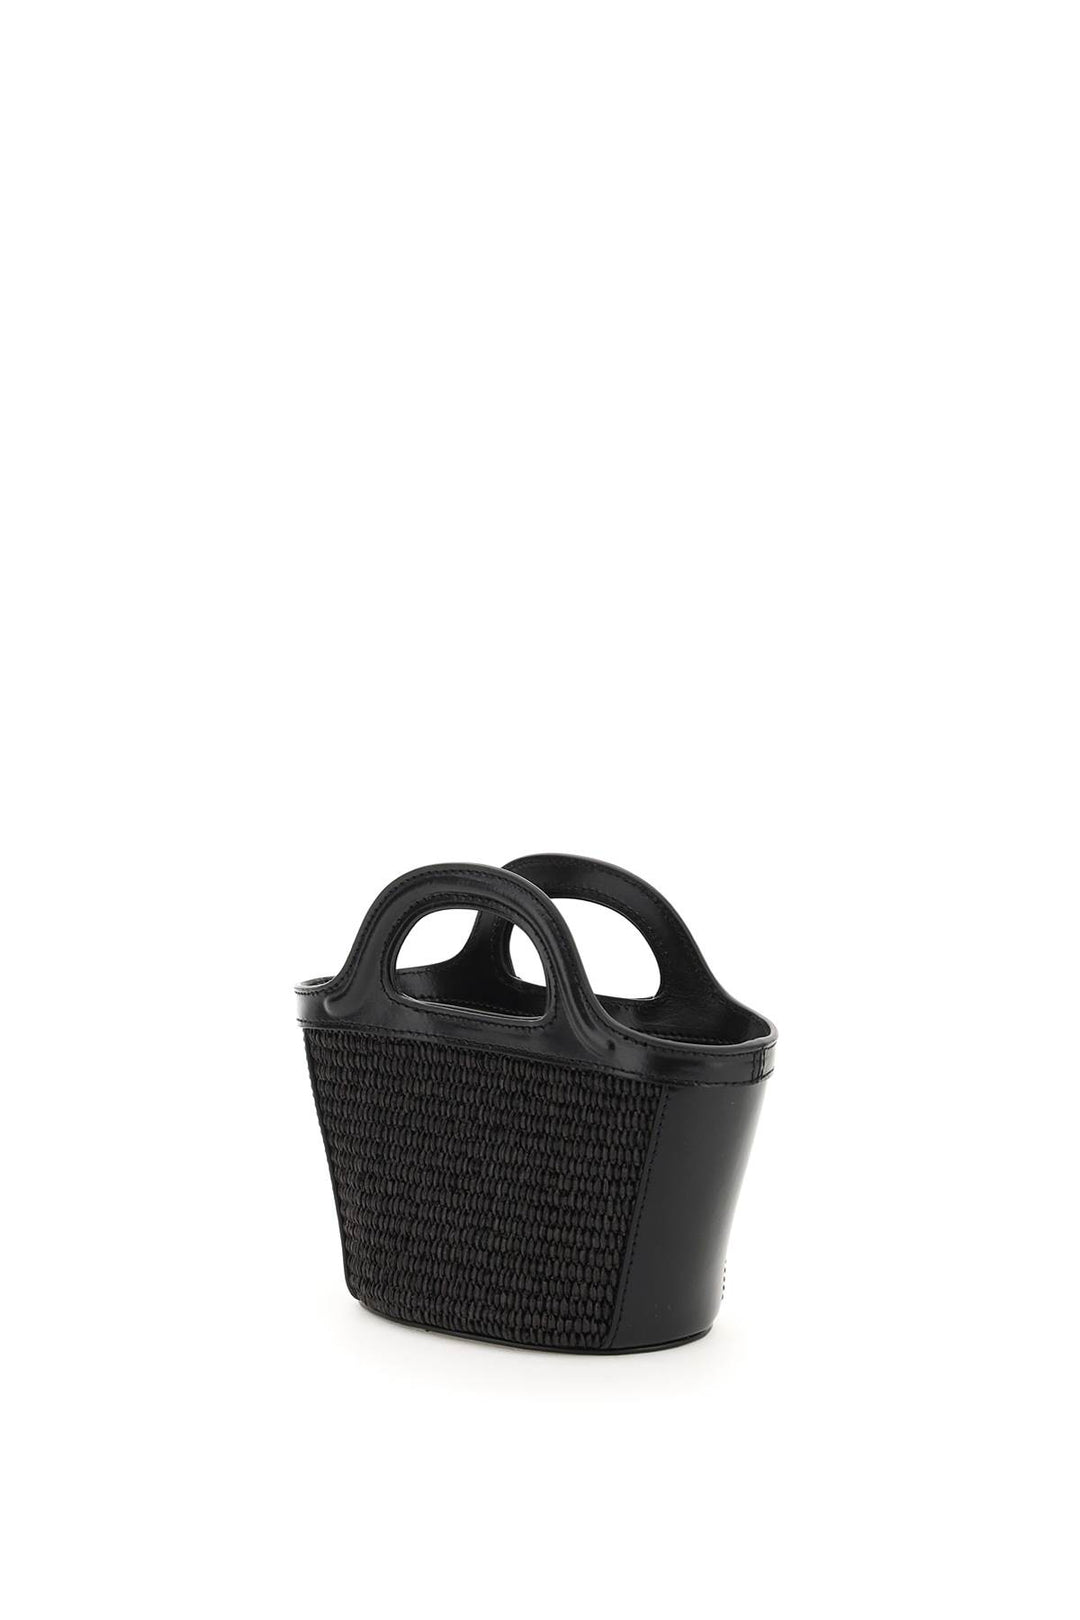 Marni Micro Tropicalia Bucket Bag   Black